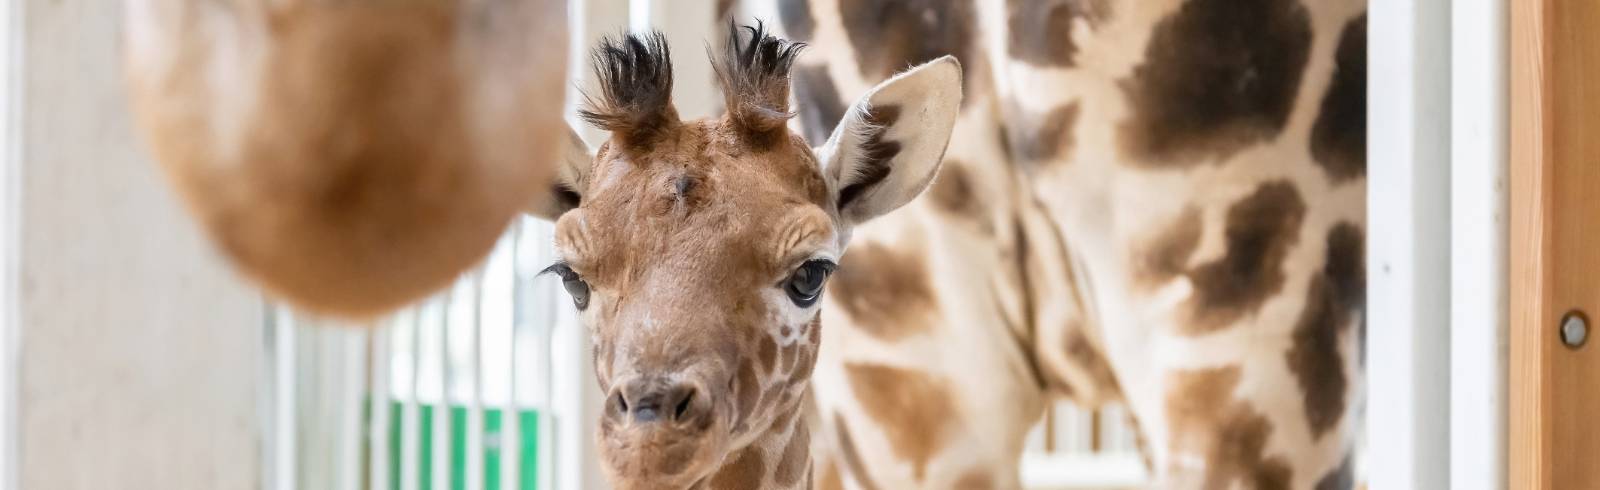 Starker Name für Giraffen-Jungtier